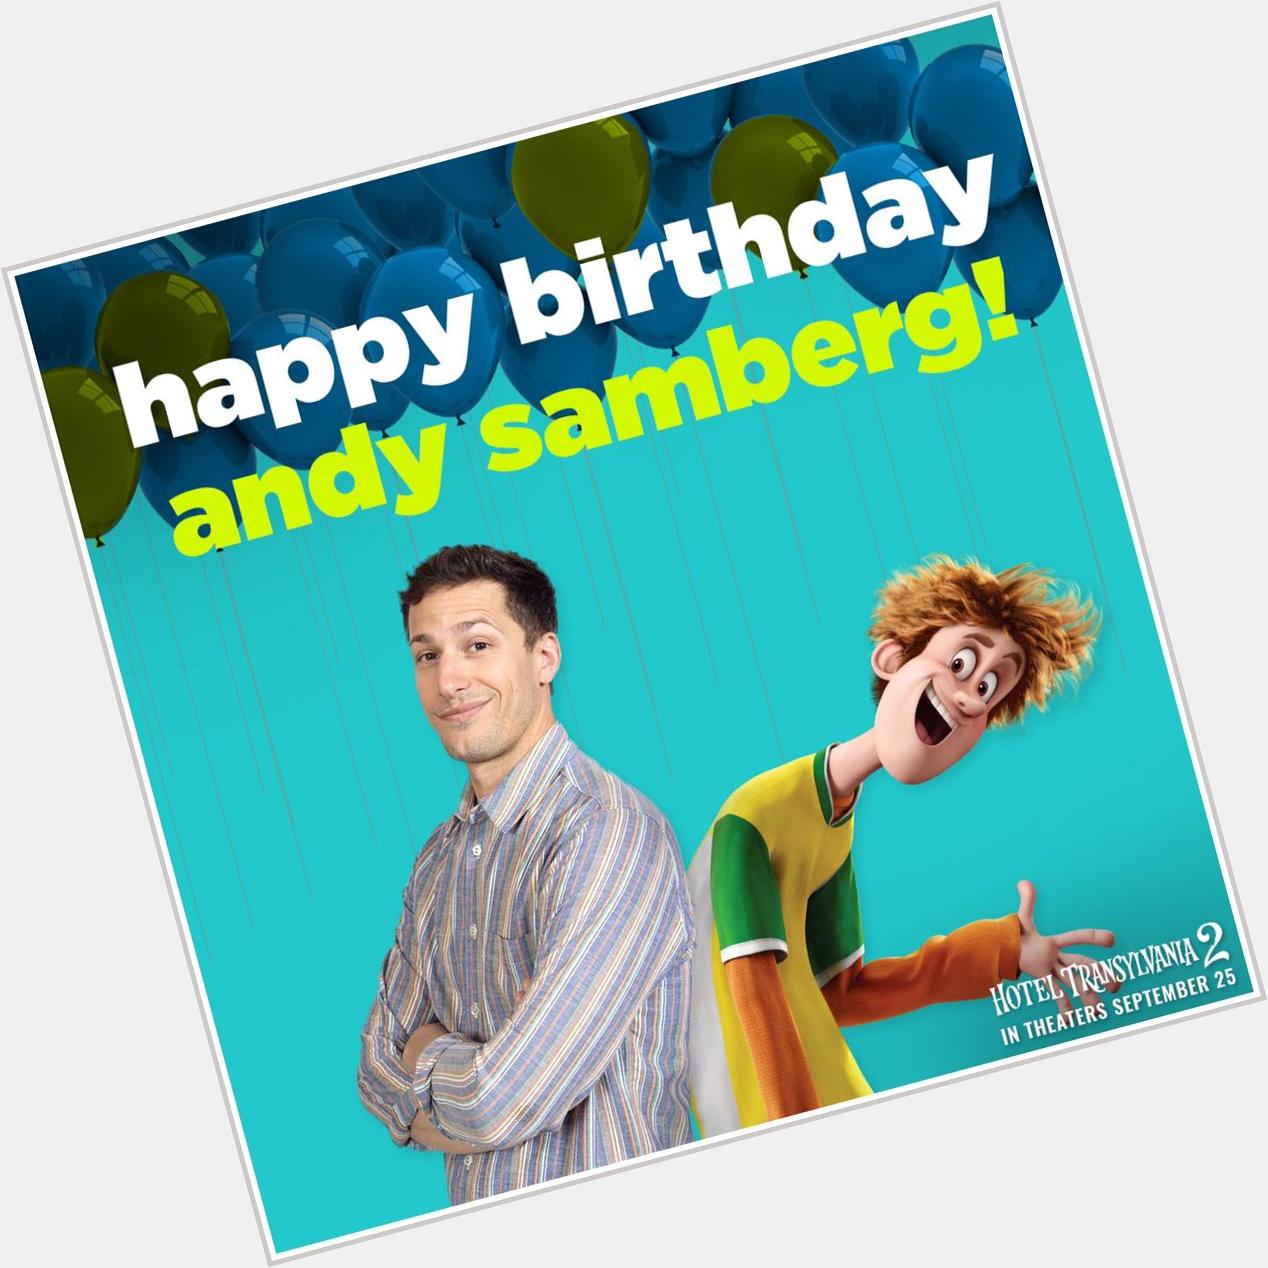 Happy birthday to Johnnystein in the flesh Andy Samberg! 